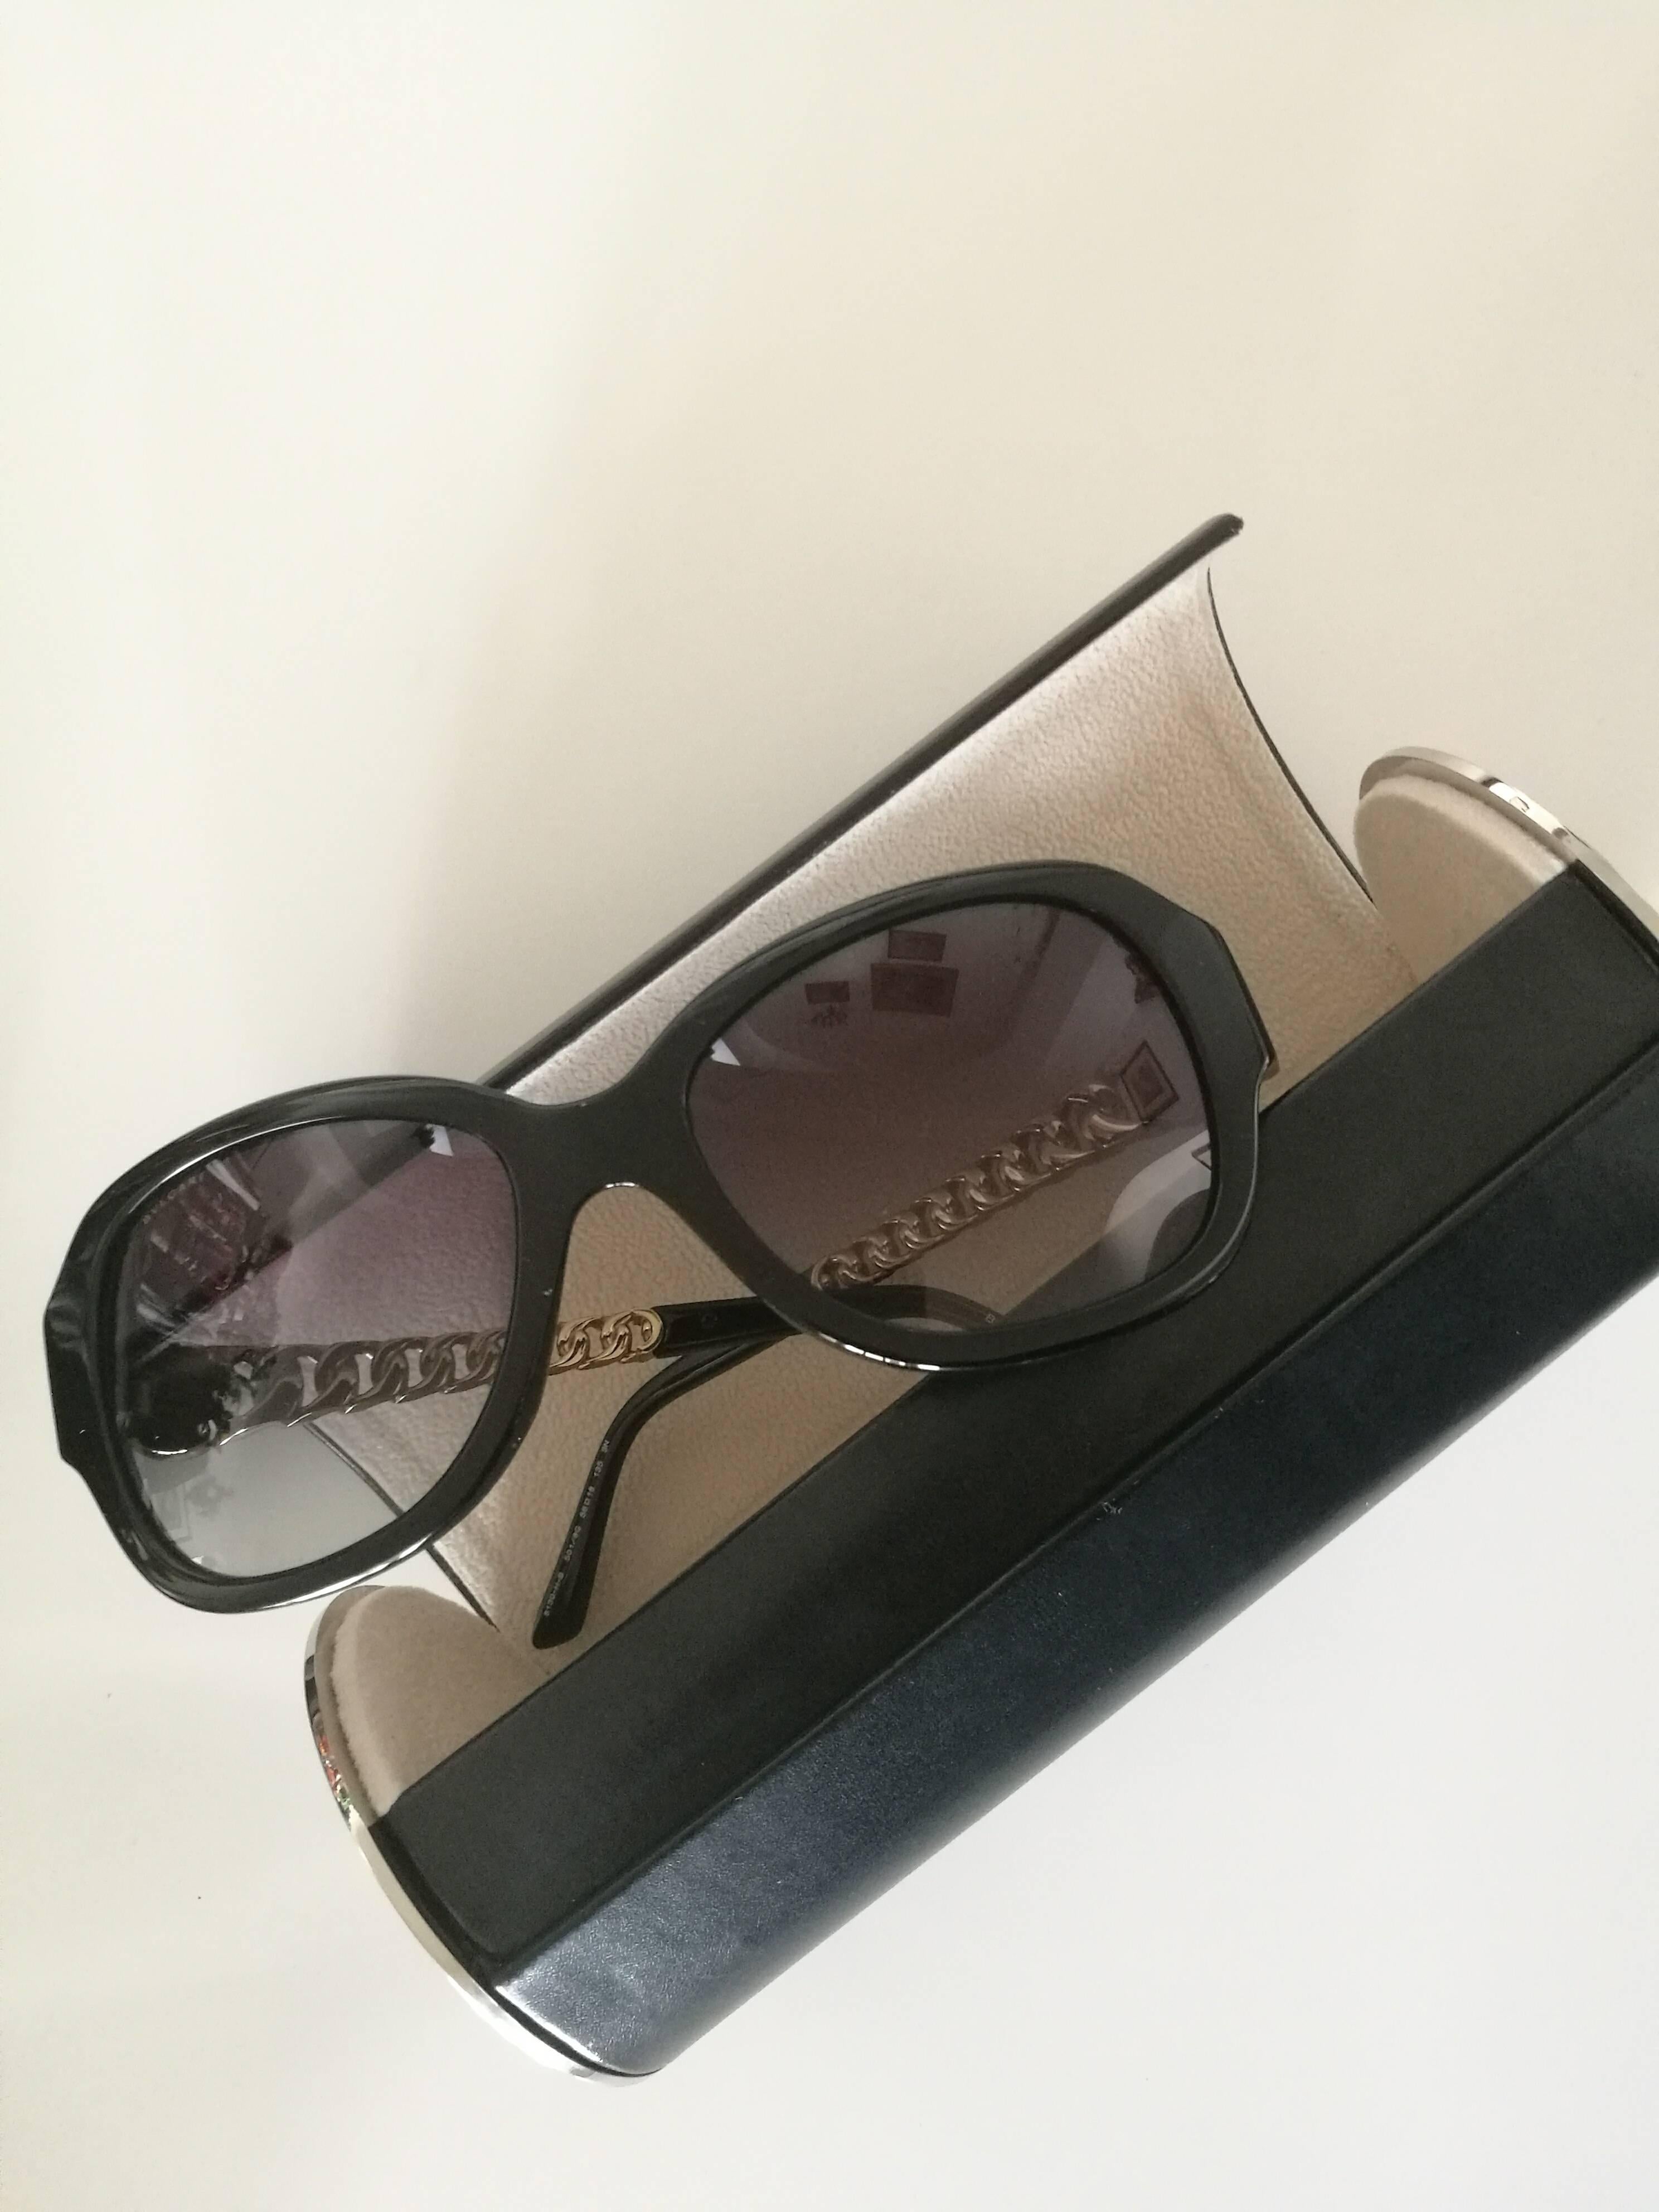 Bulgari Black Sunglasses NWOT
Totally made in italy still with box
unworn
